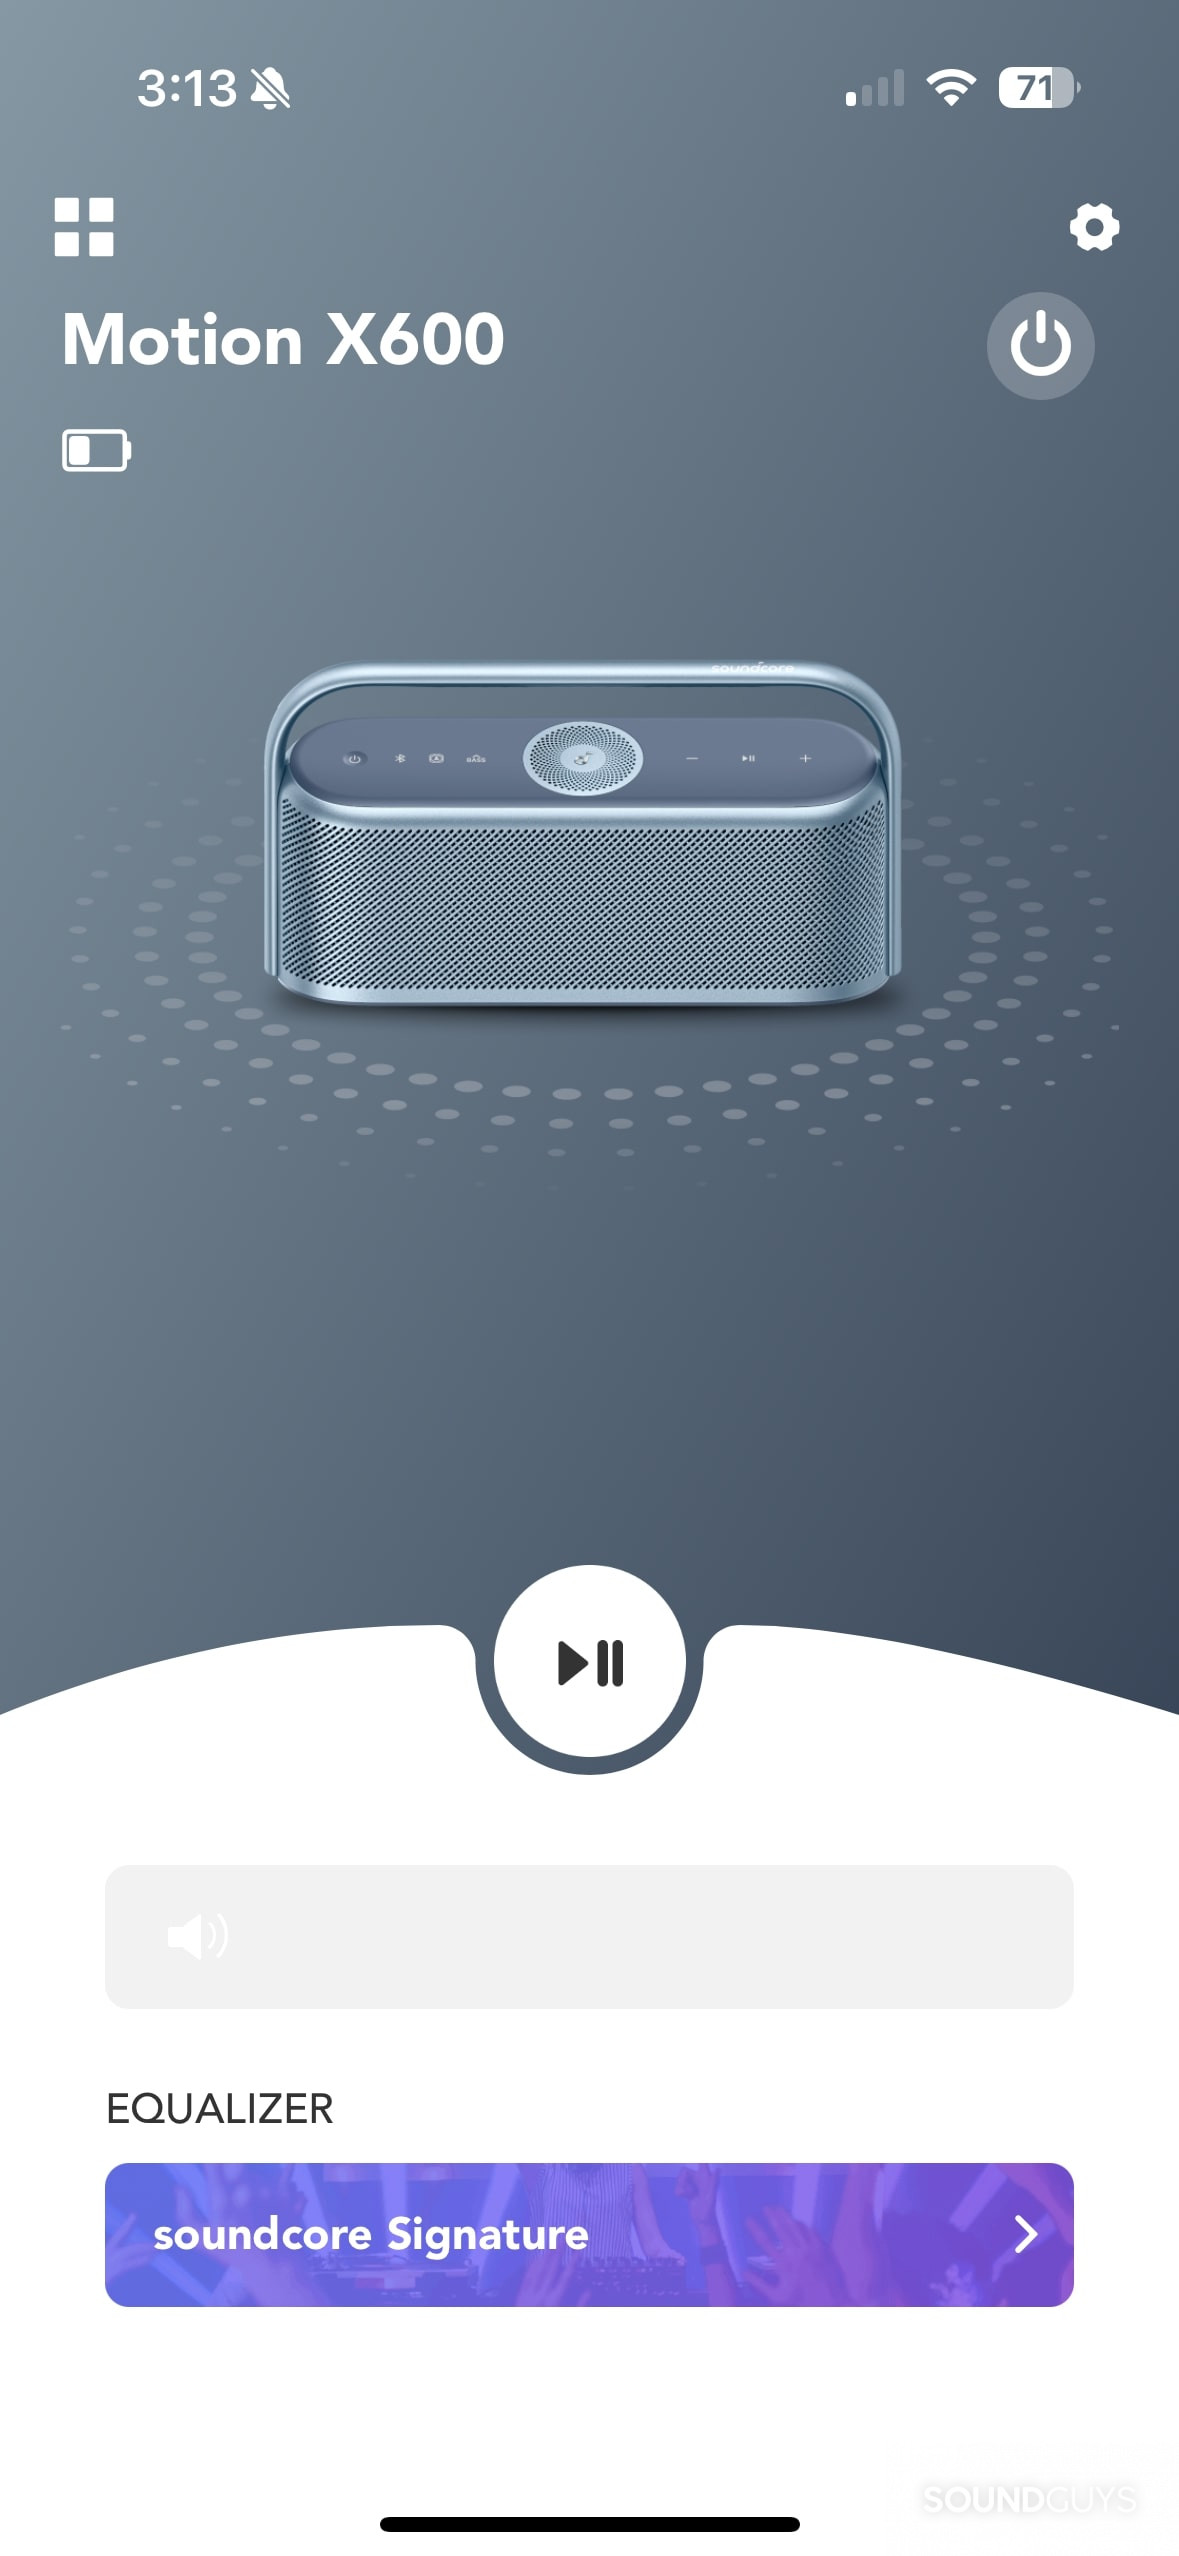 Anker Soundcore Motion X600 app home screen.